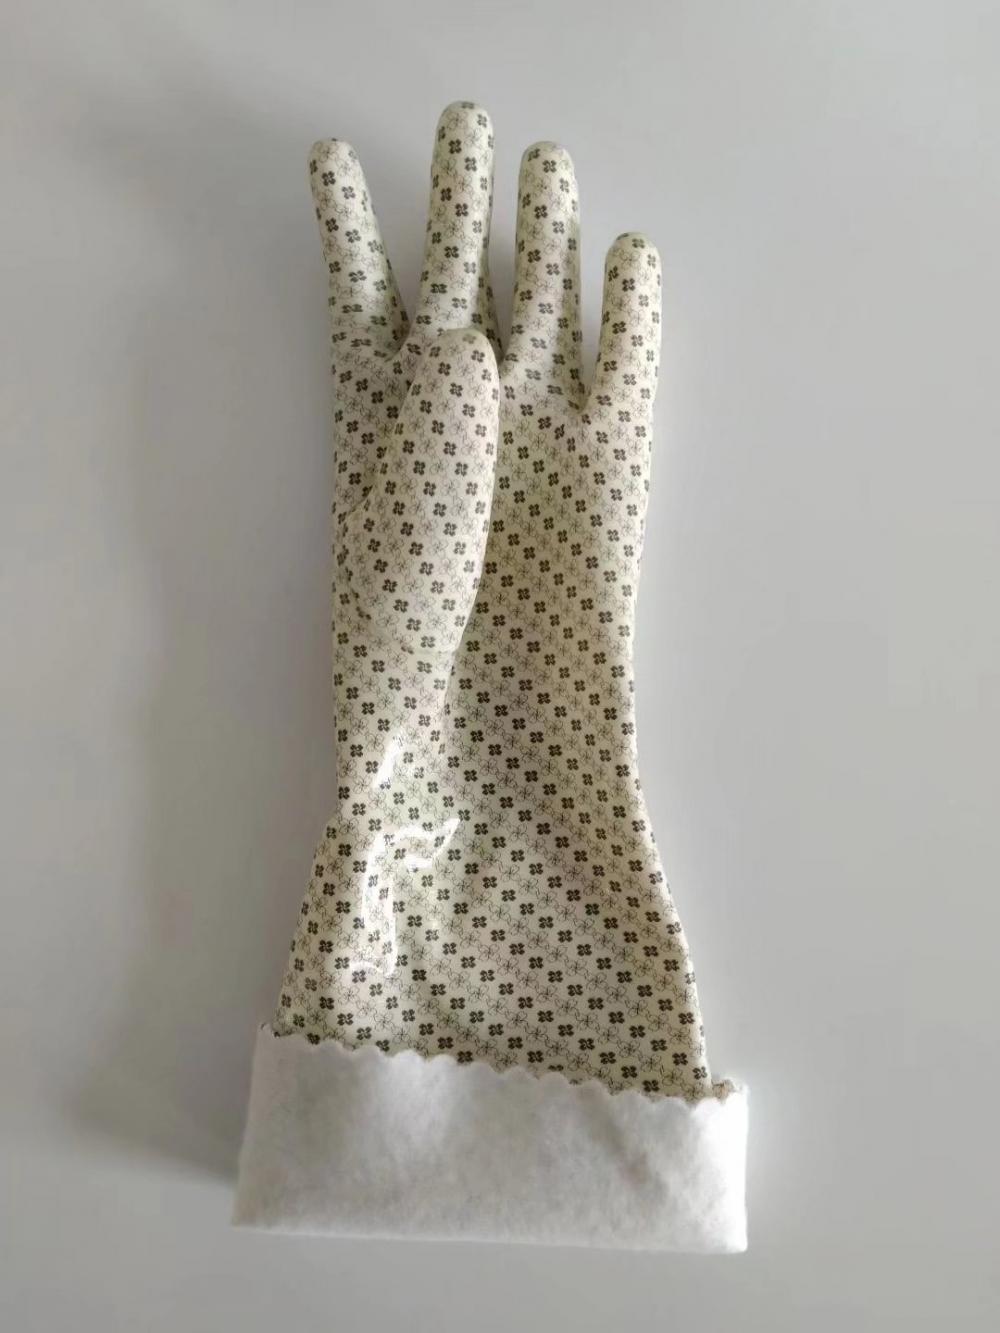 The kitchen Transparent gloves